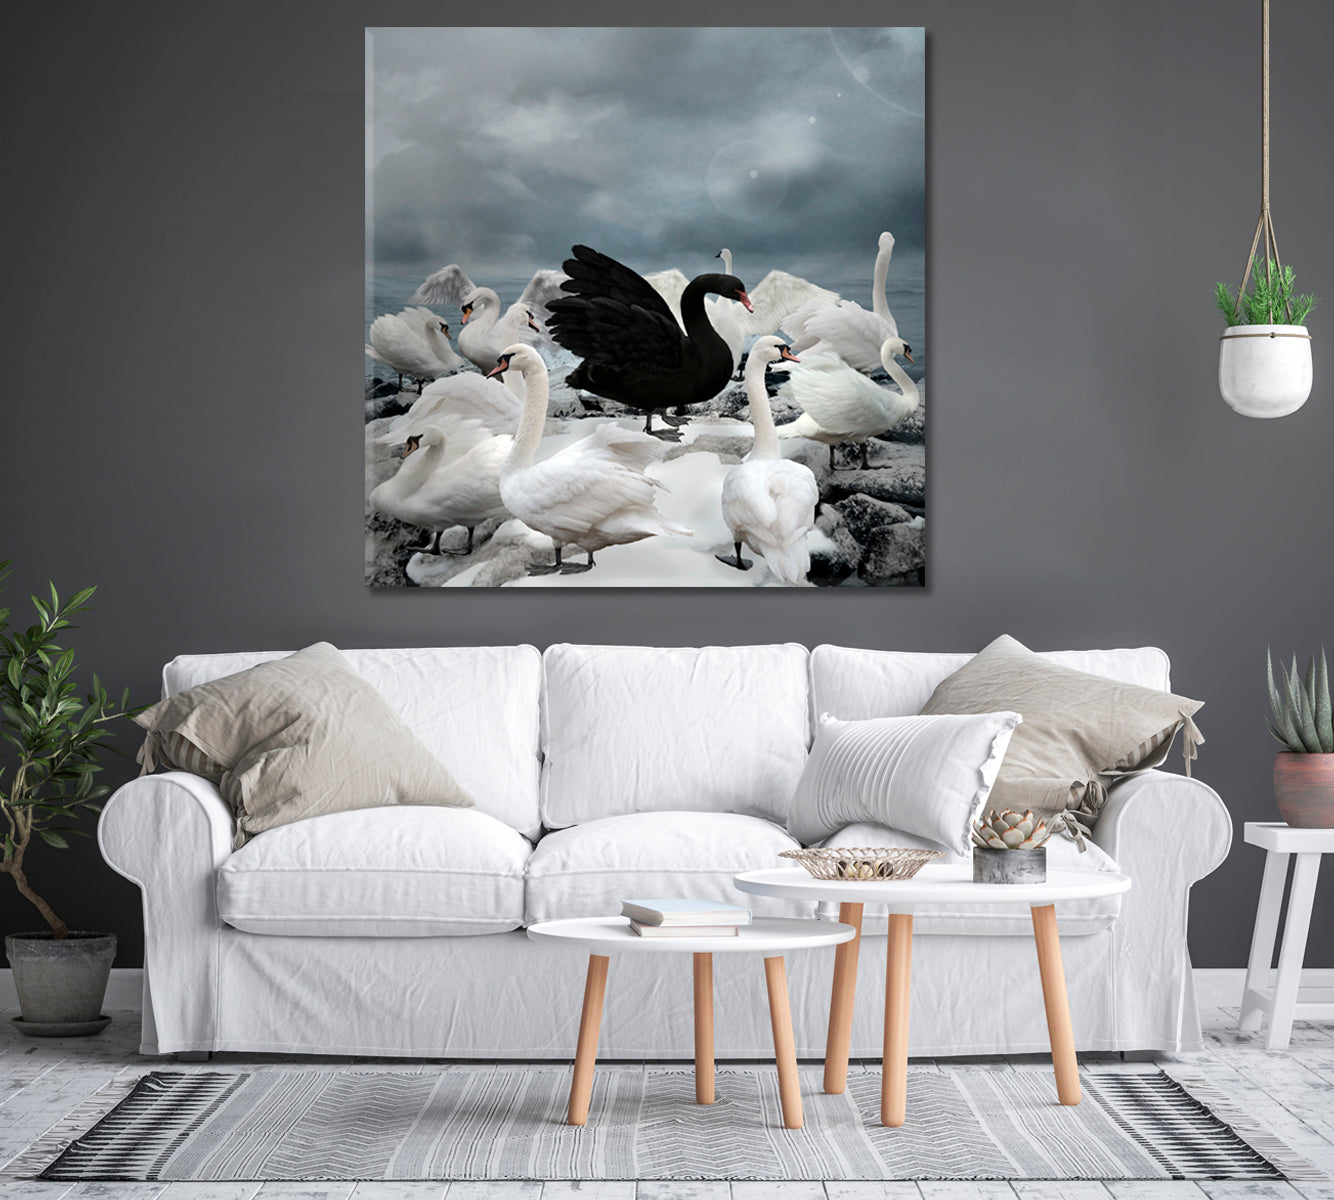 Single Black Swan among White Swans Canvas Print-Canvas Print-CetArt-1 panel-12x12 inches-CetArt